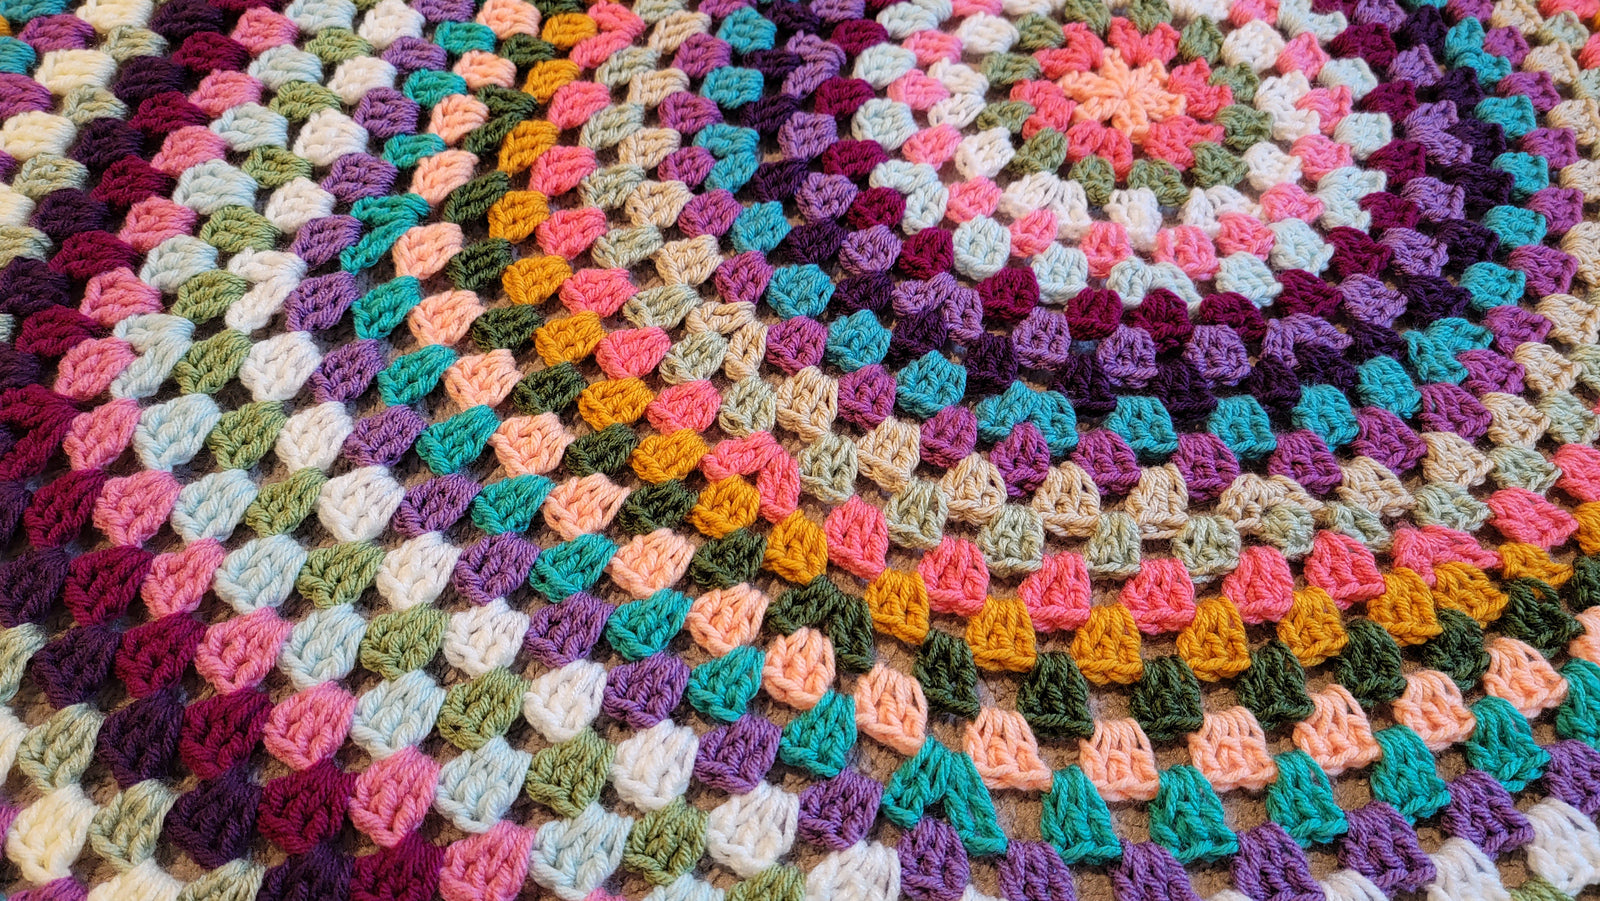 Crochet Afghan Downloads - Mandala-Style Throws to Crochet